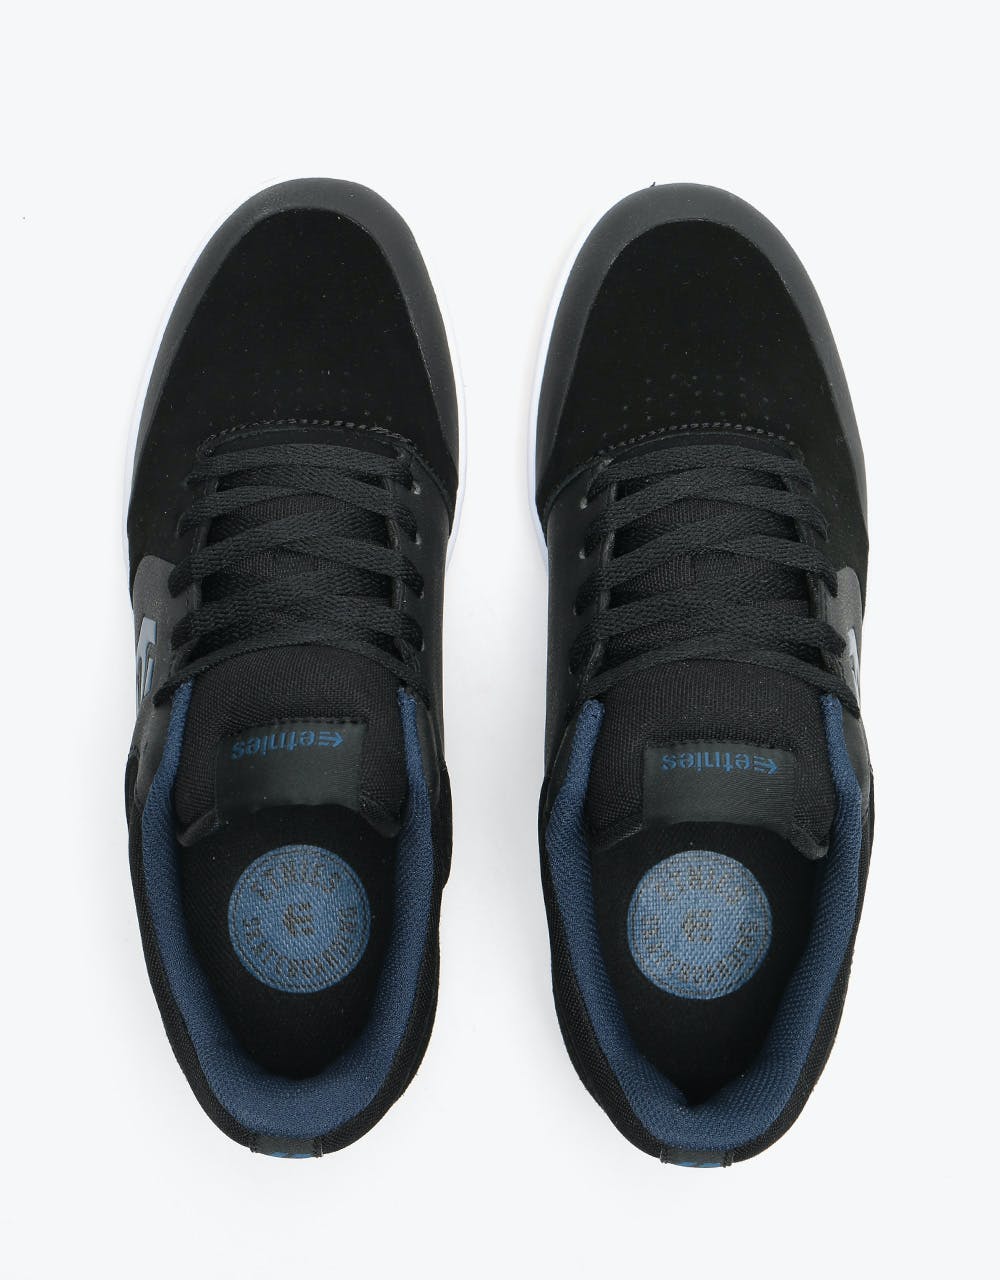 Etnies x Michelin Marana Skate Shoes - Black/Blue